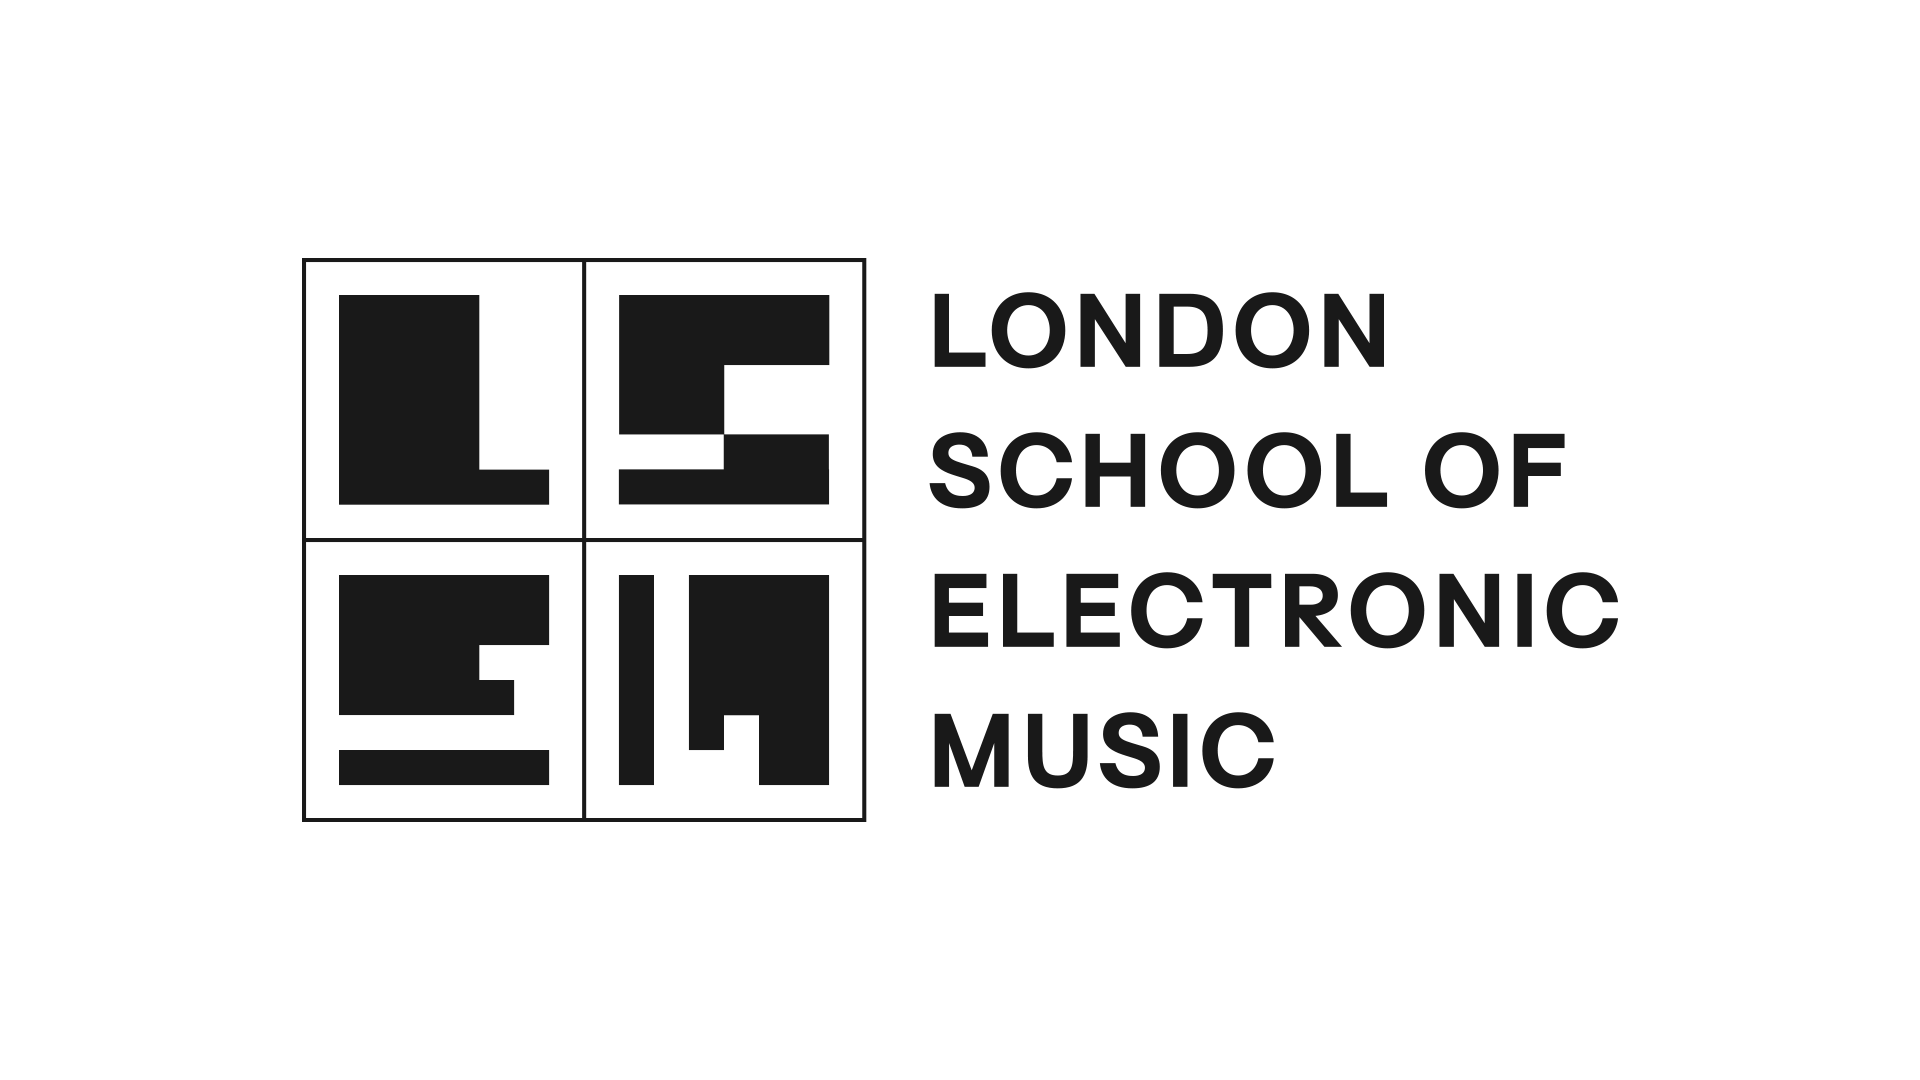 London School of Electronic Music